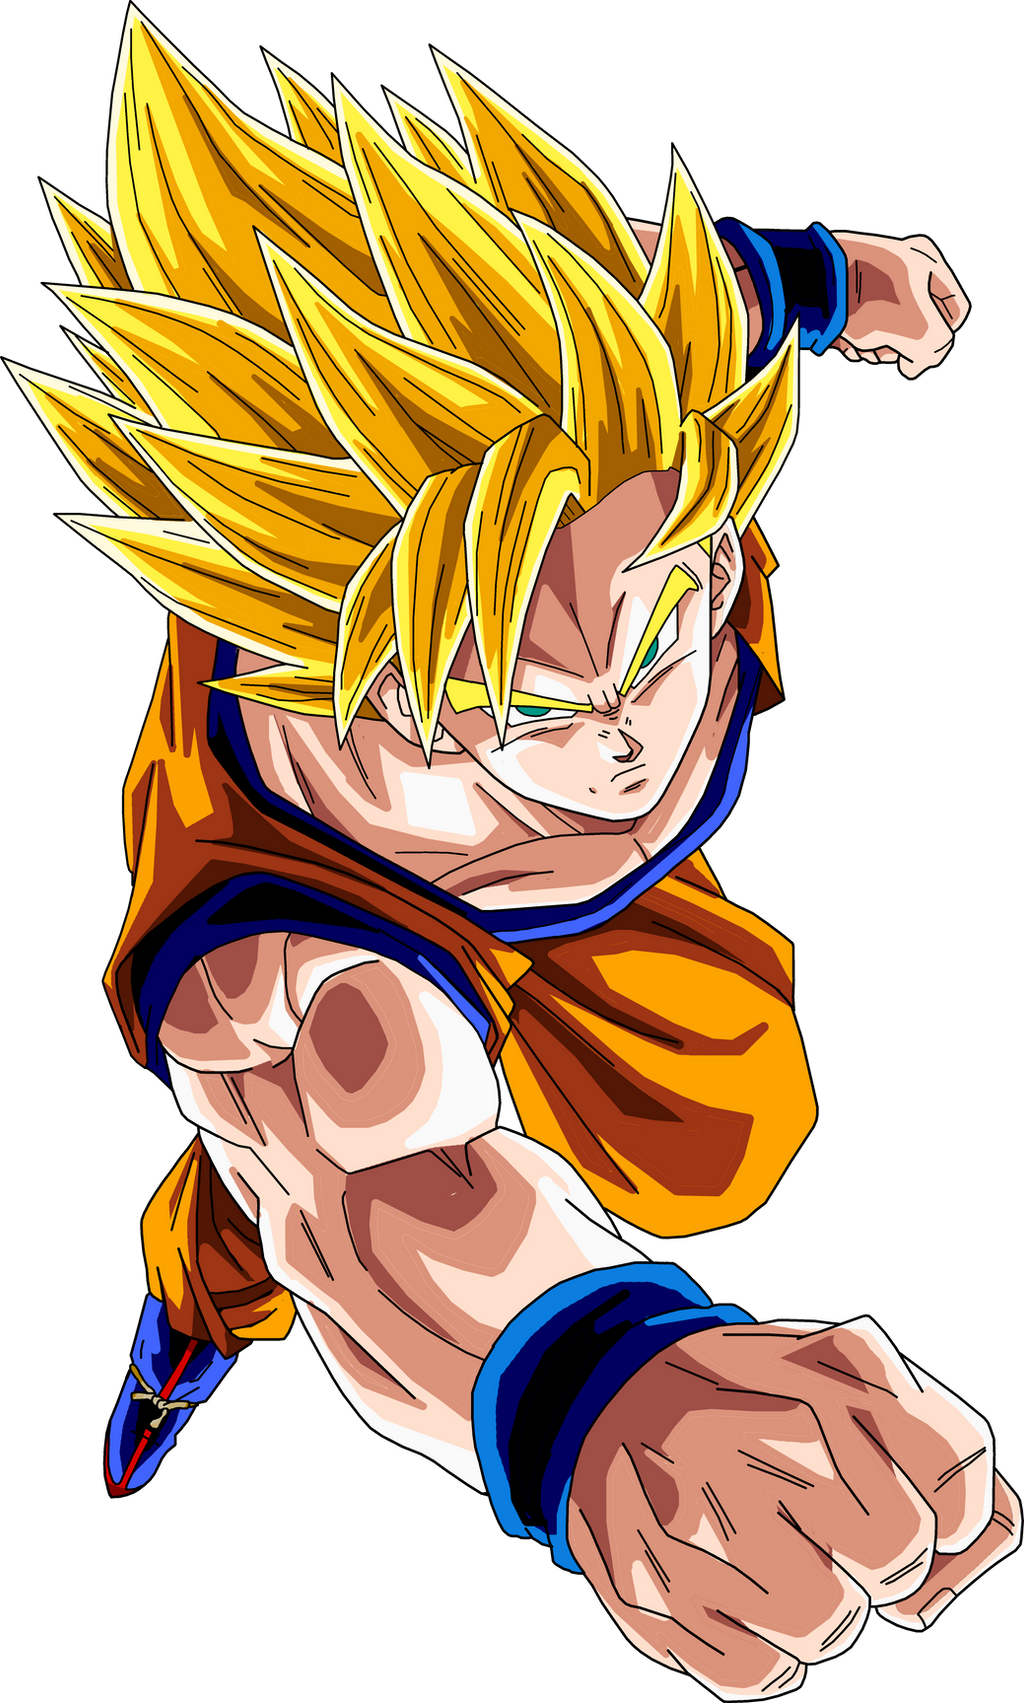 Super Saiyan 2 Goku Version 2 by BrusselTheSaiyan on DeviantArt